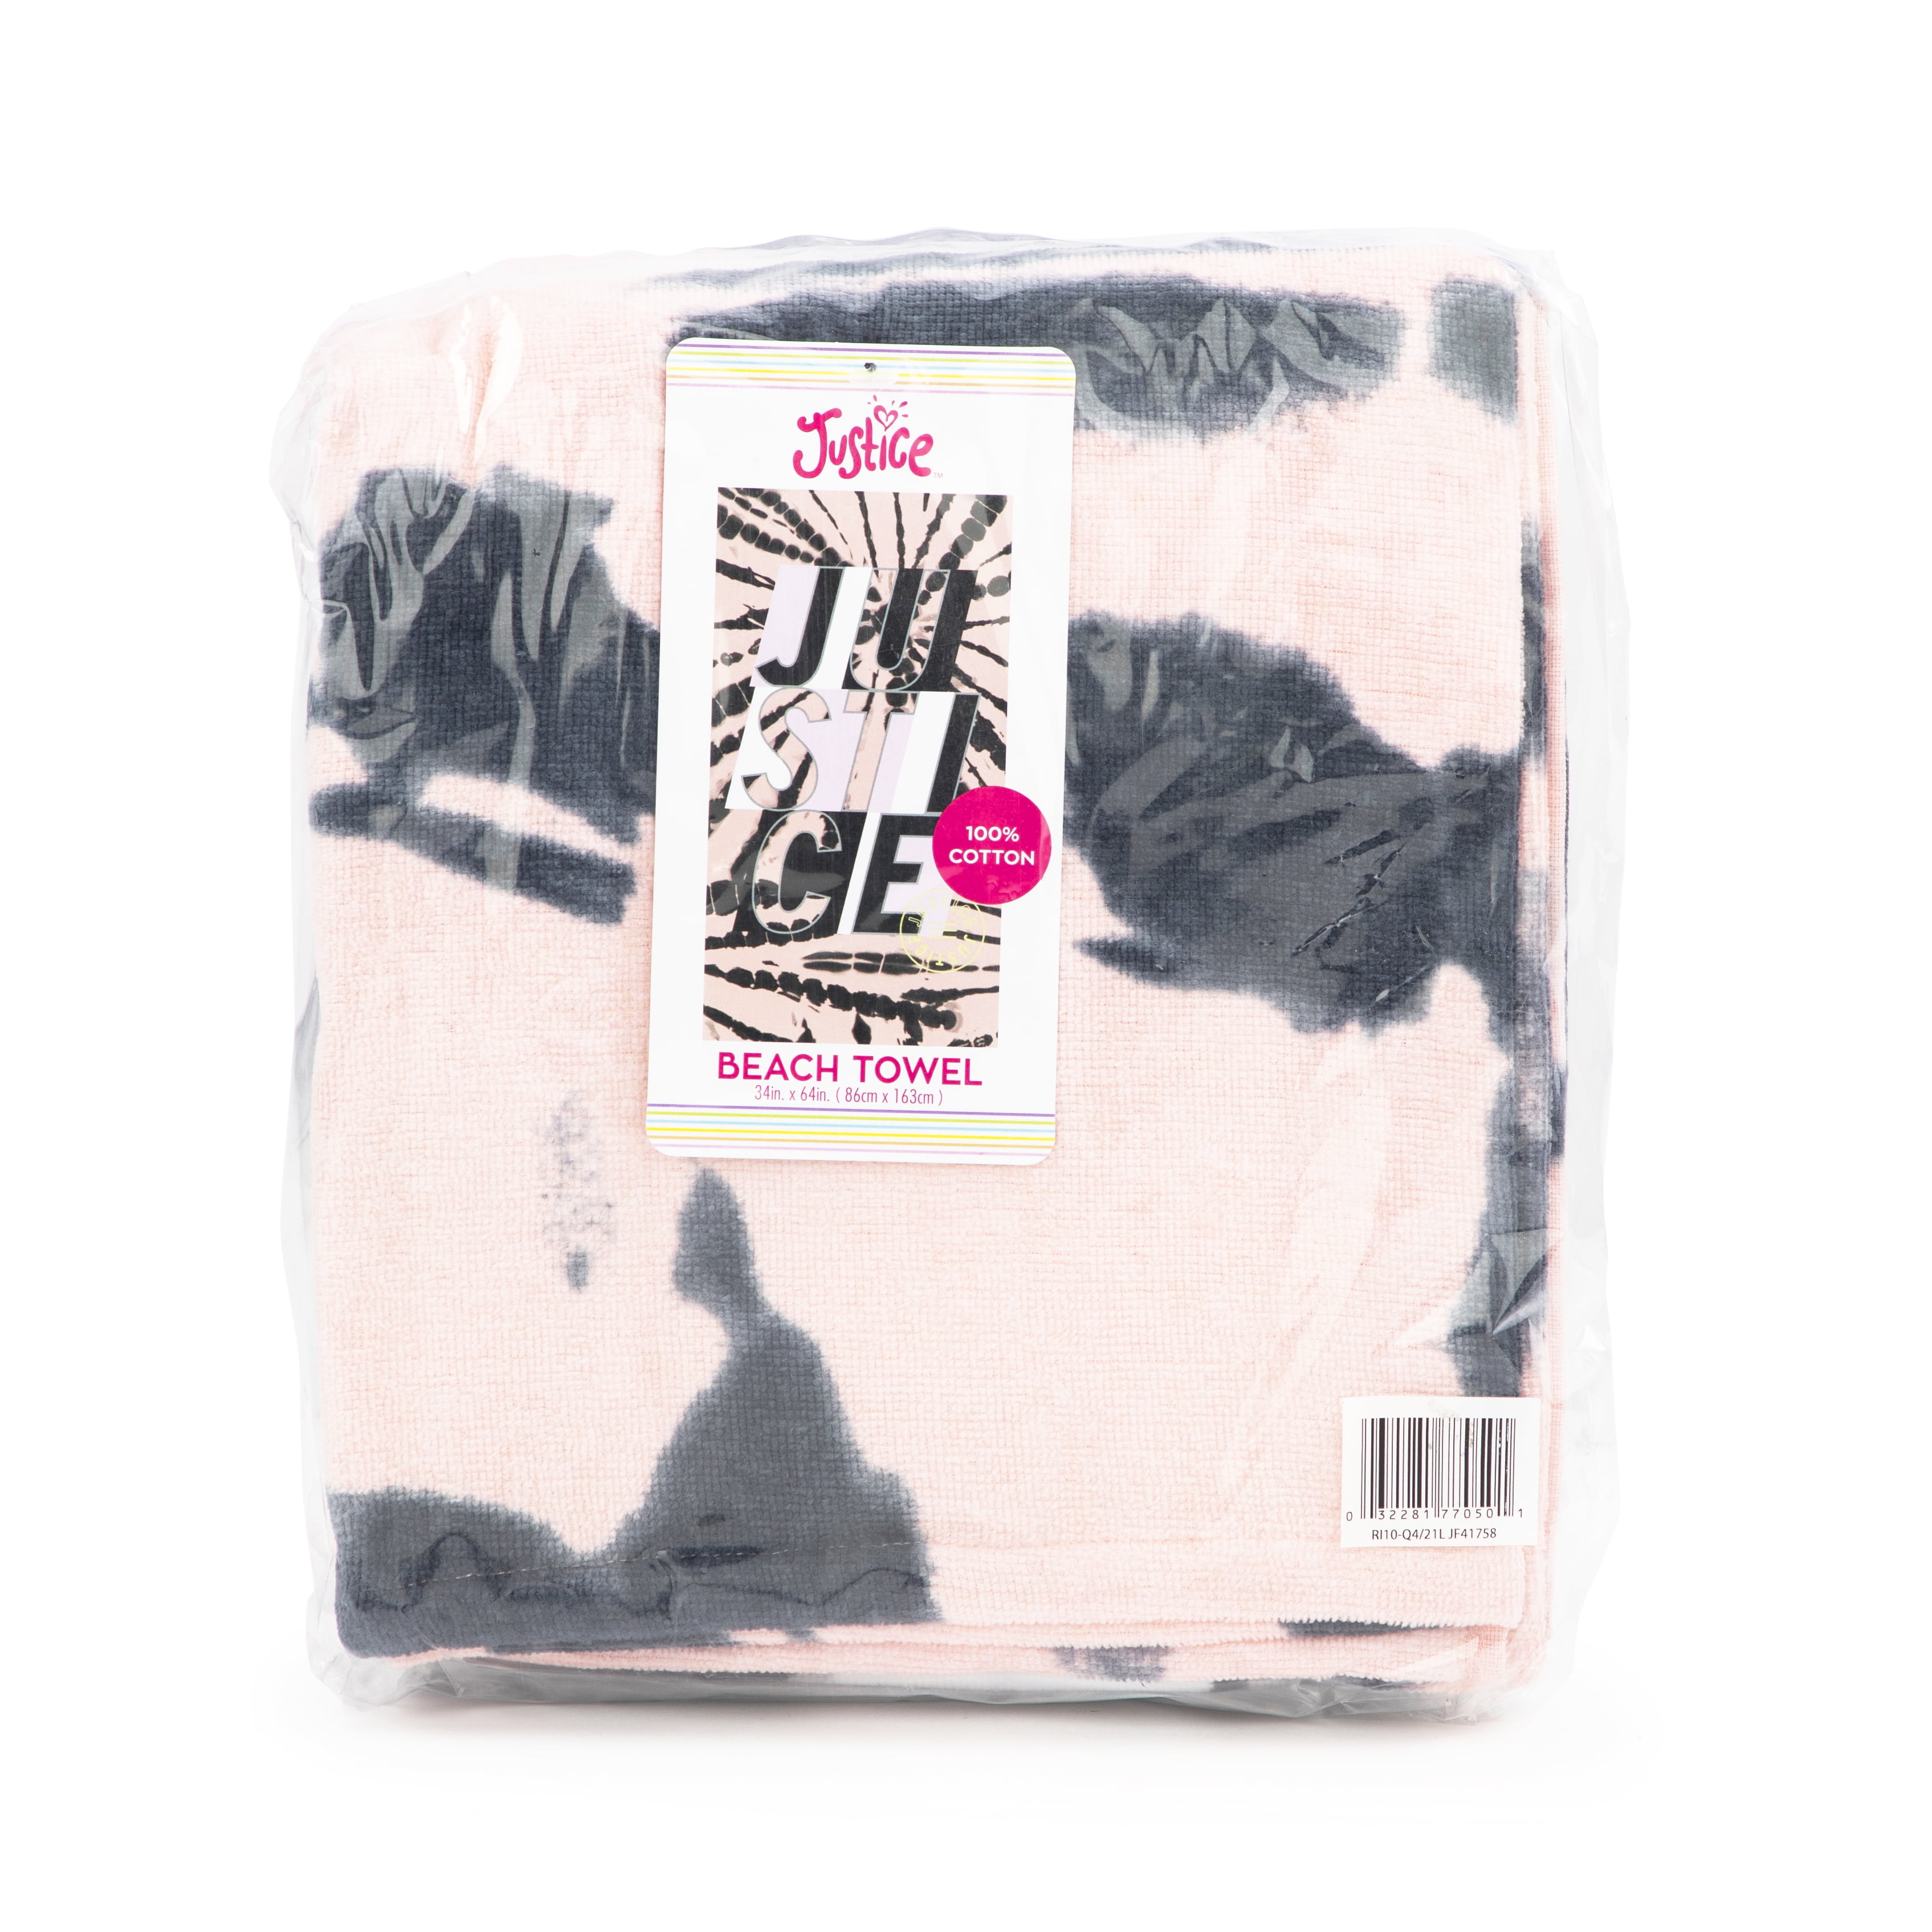 Justice Beach Towels Bundle 2-Pack, 100% Cotton, 64 x 34, Desert Flower &  Butterfly Wings 